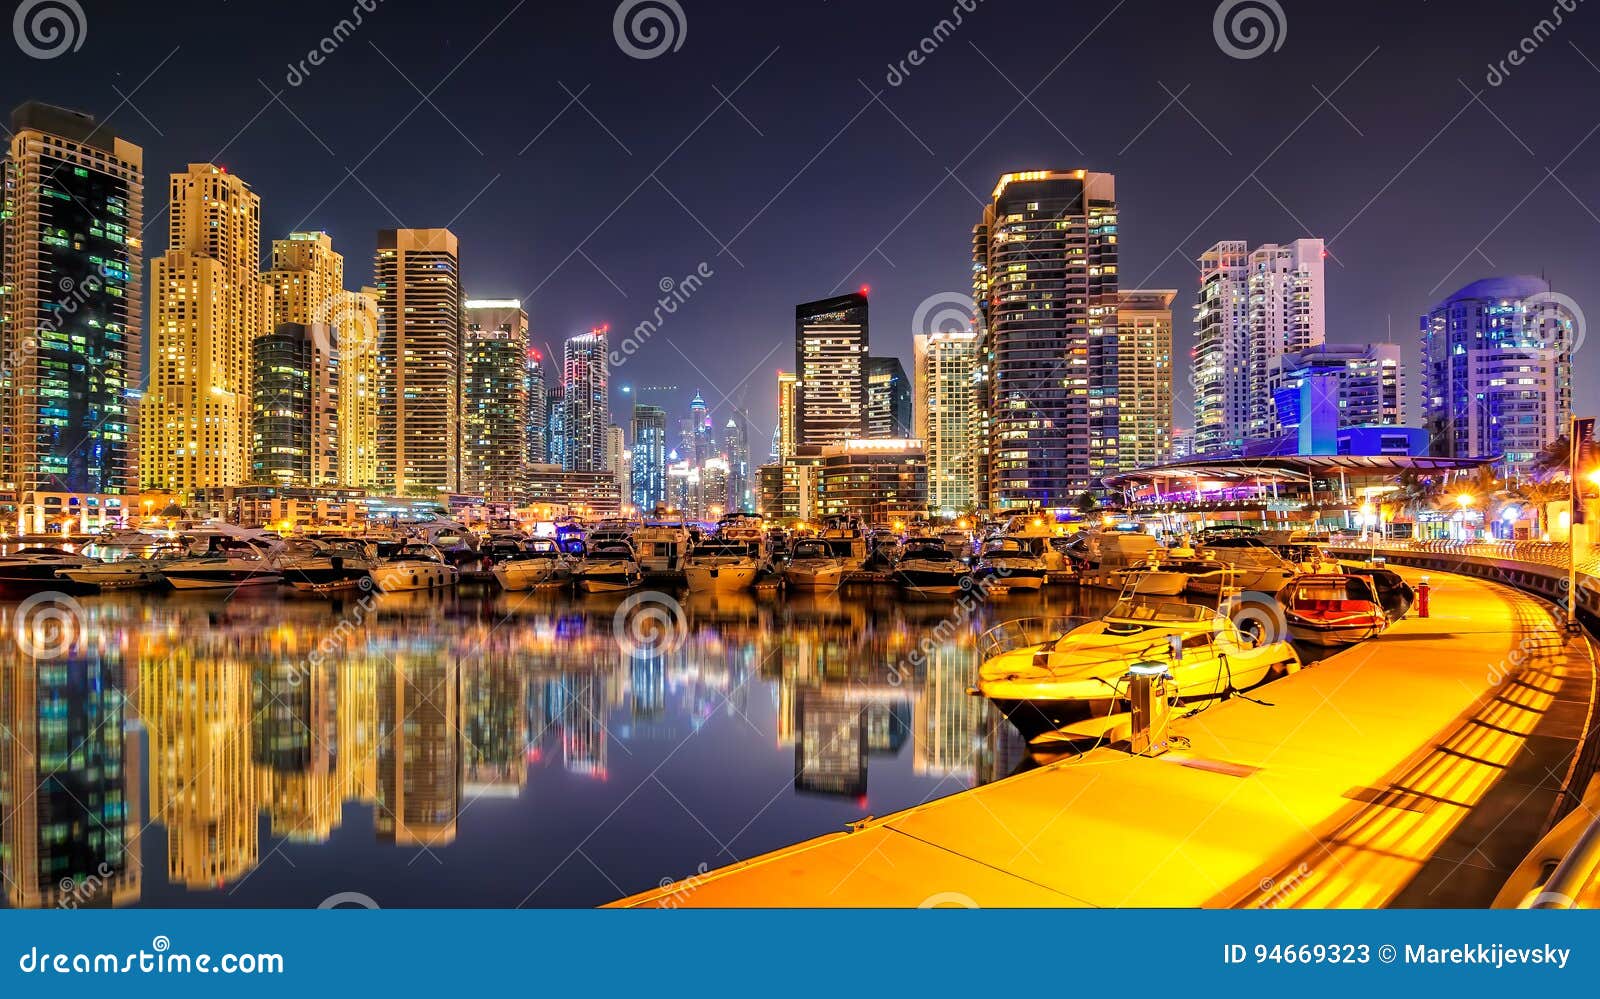 incredible night dubai marina skyline. luxury yacht dock. dubai, united arab emirates.